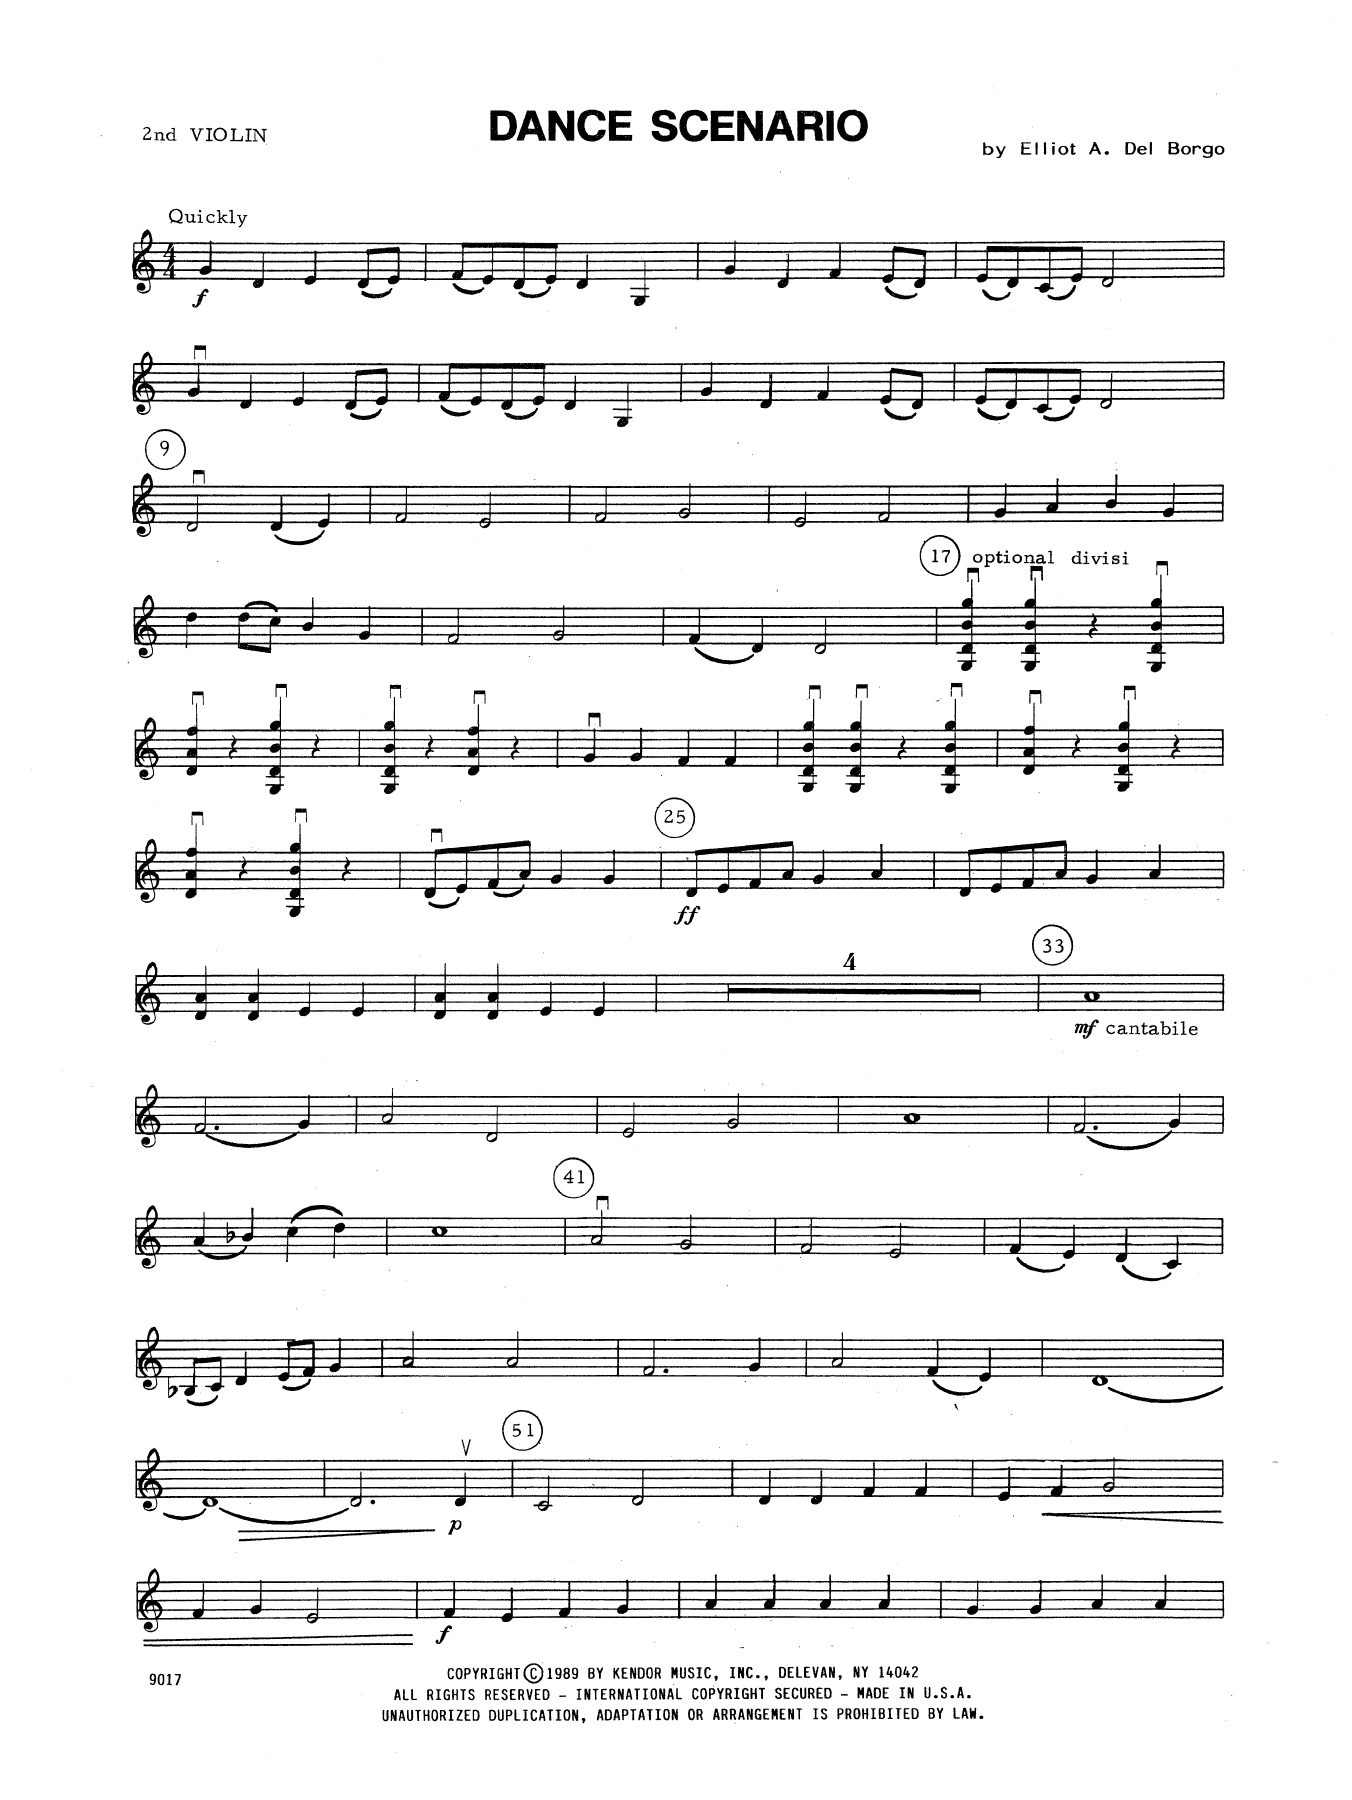 Download Elliot A. Del Borgo Dance Scenario - 2nd Violin Sheet Music